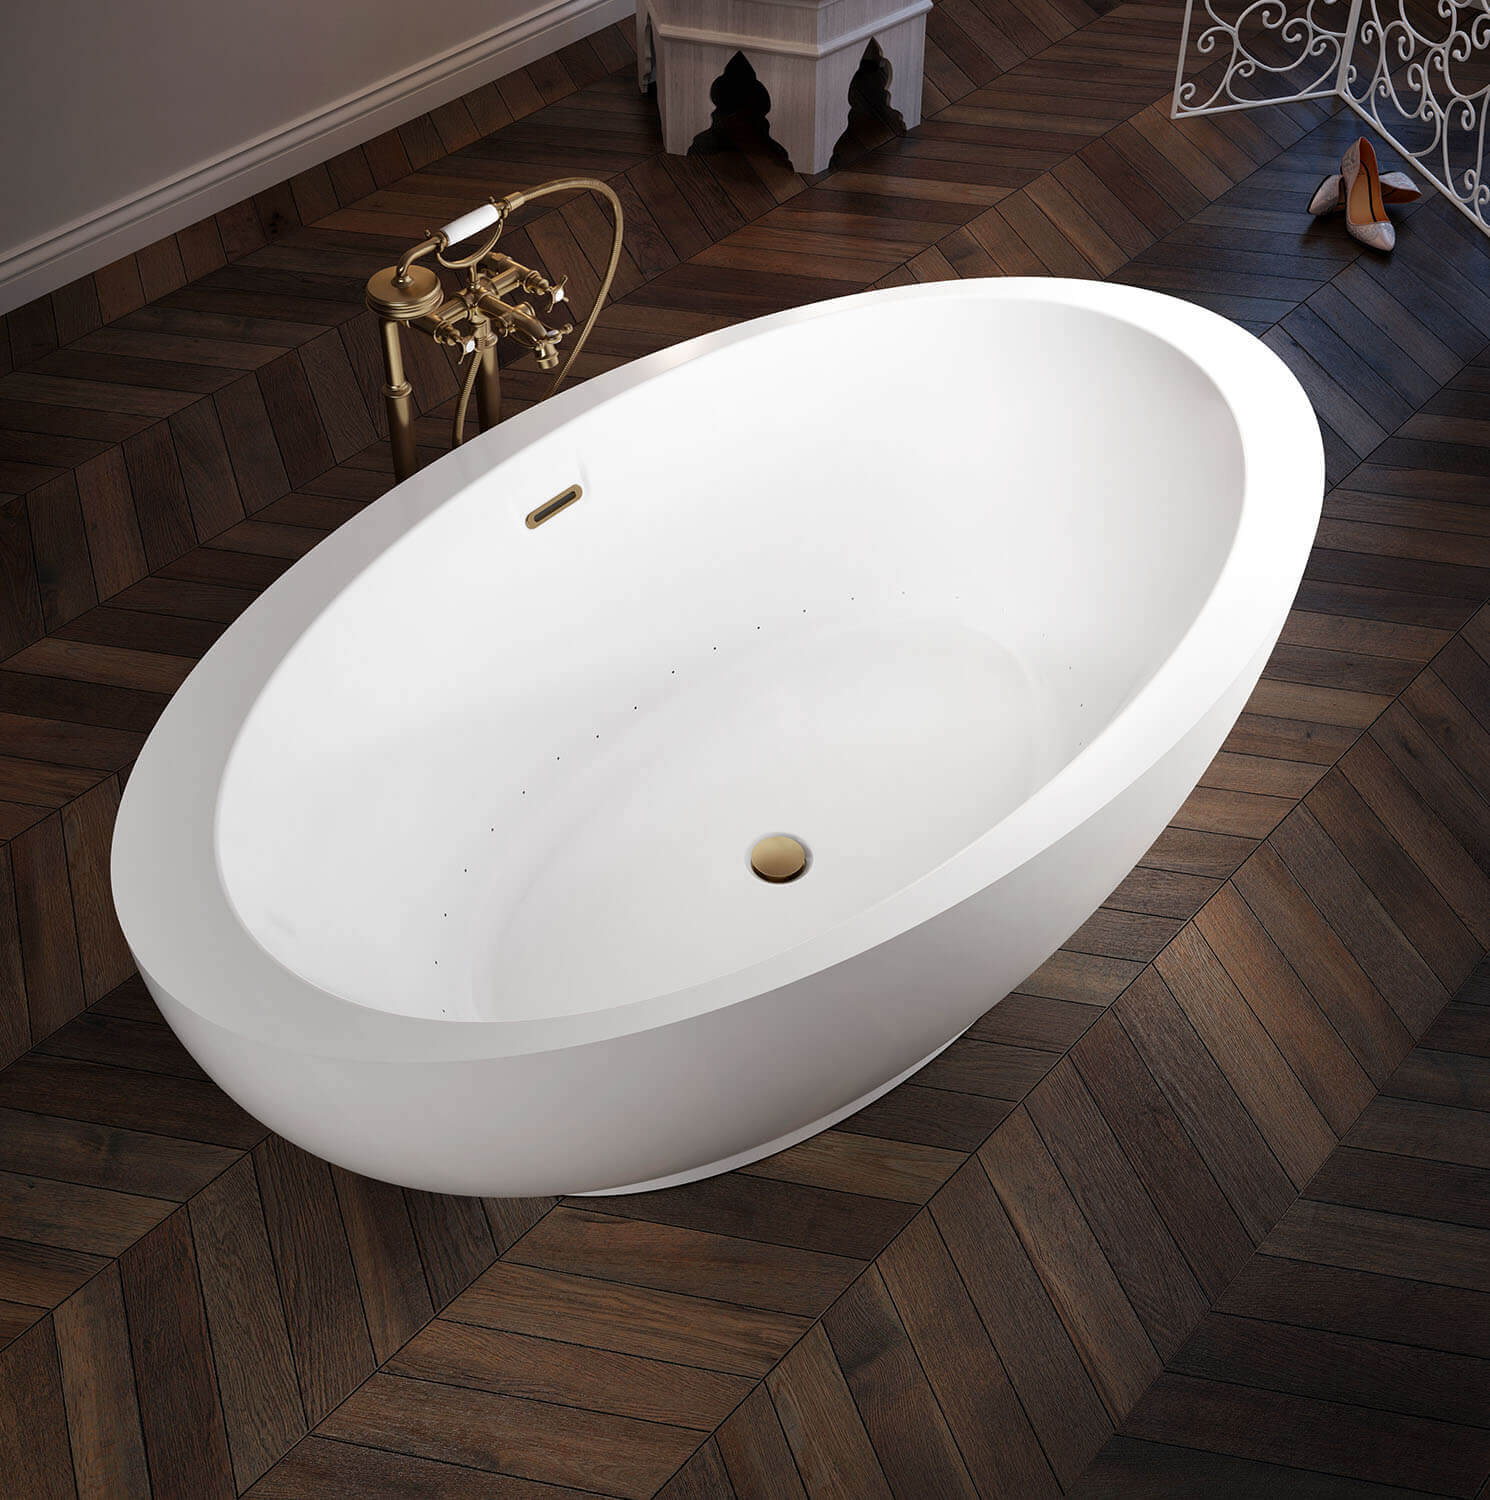 Opalia 6839 Oblique Ellipse Left air jet bathtub for your modern bathroom